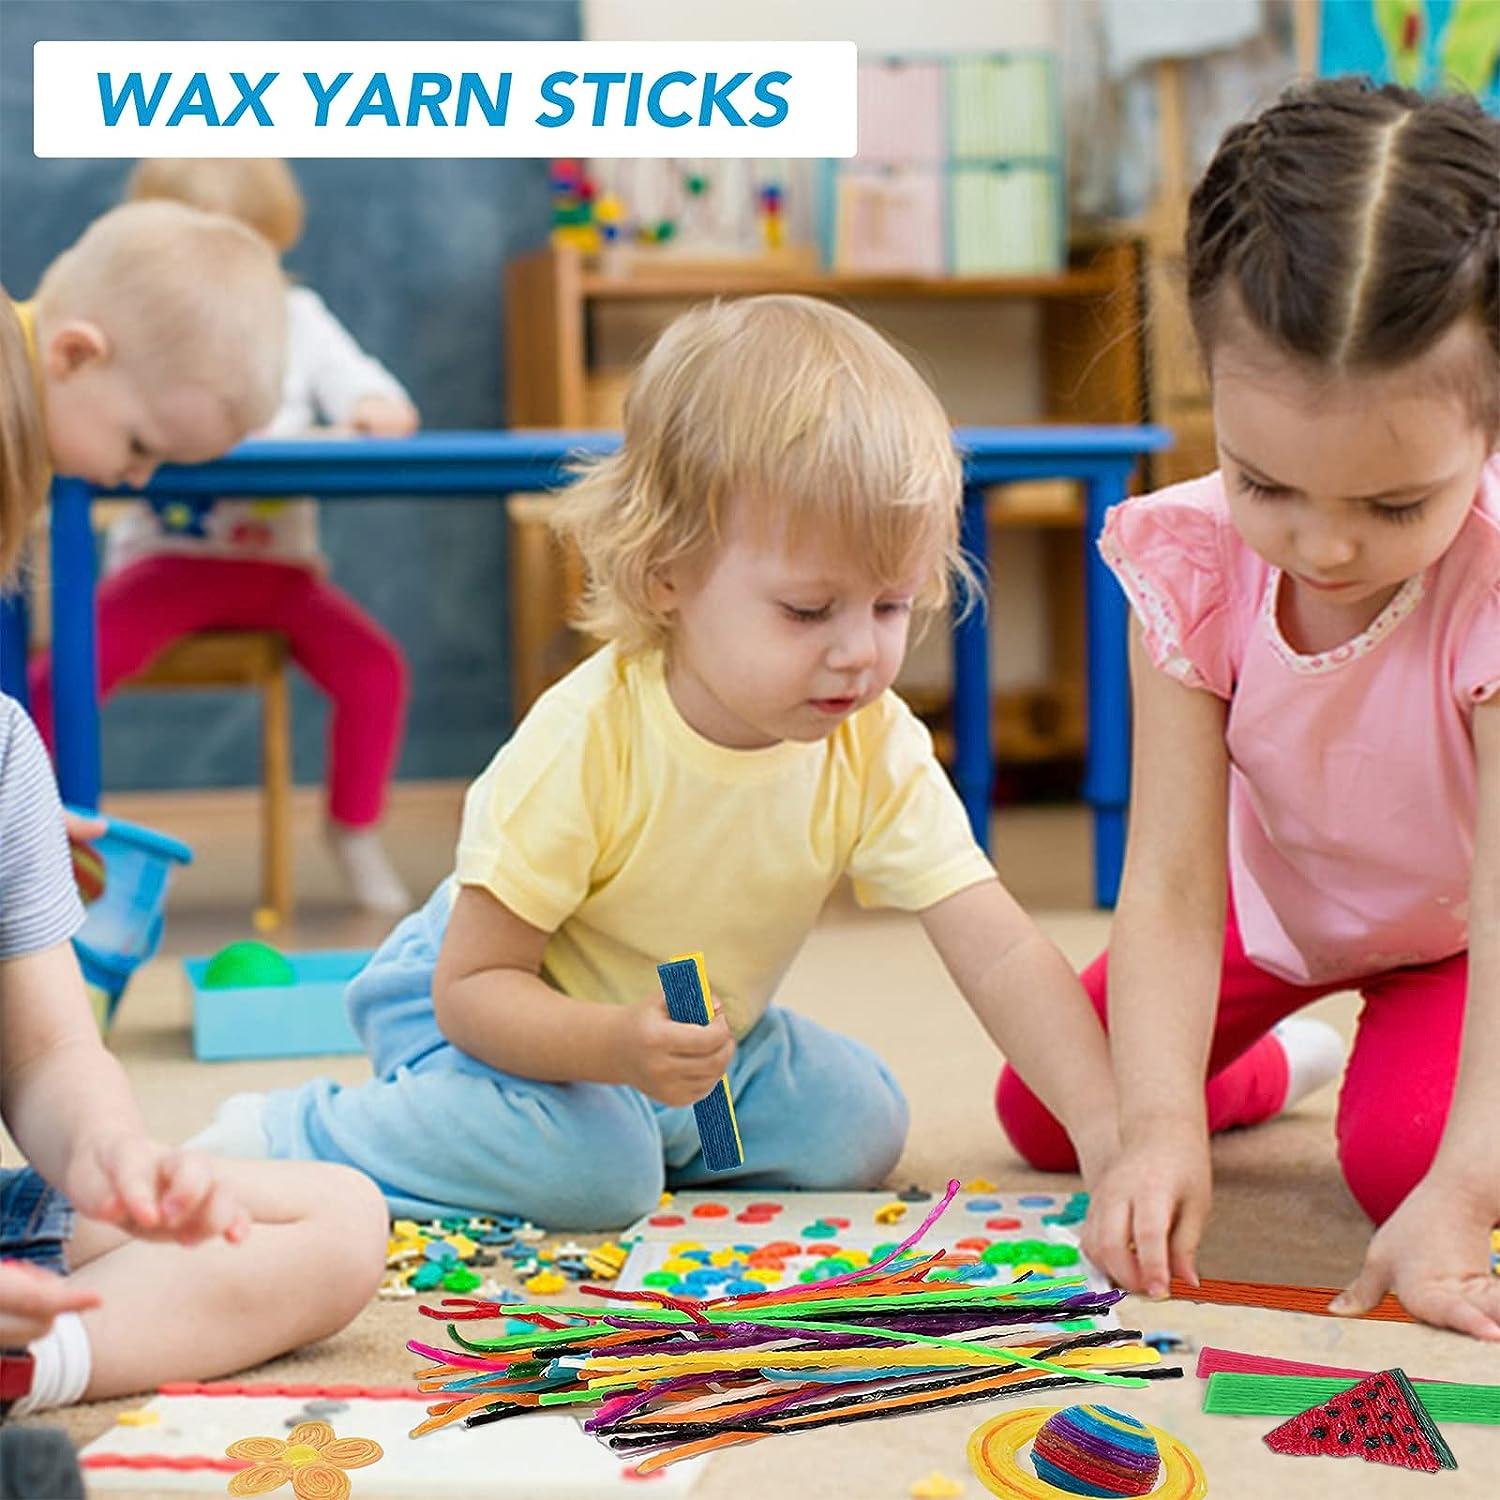 AUXSOUL 500 Pieces Wax Craft Sticks Non-Toxic Bendable Wax Sticks